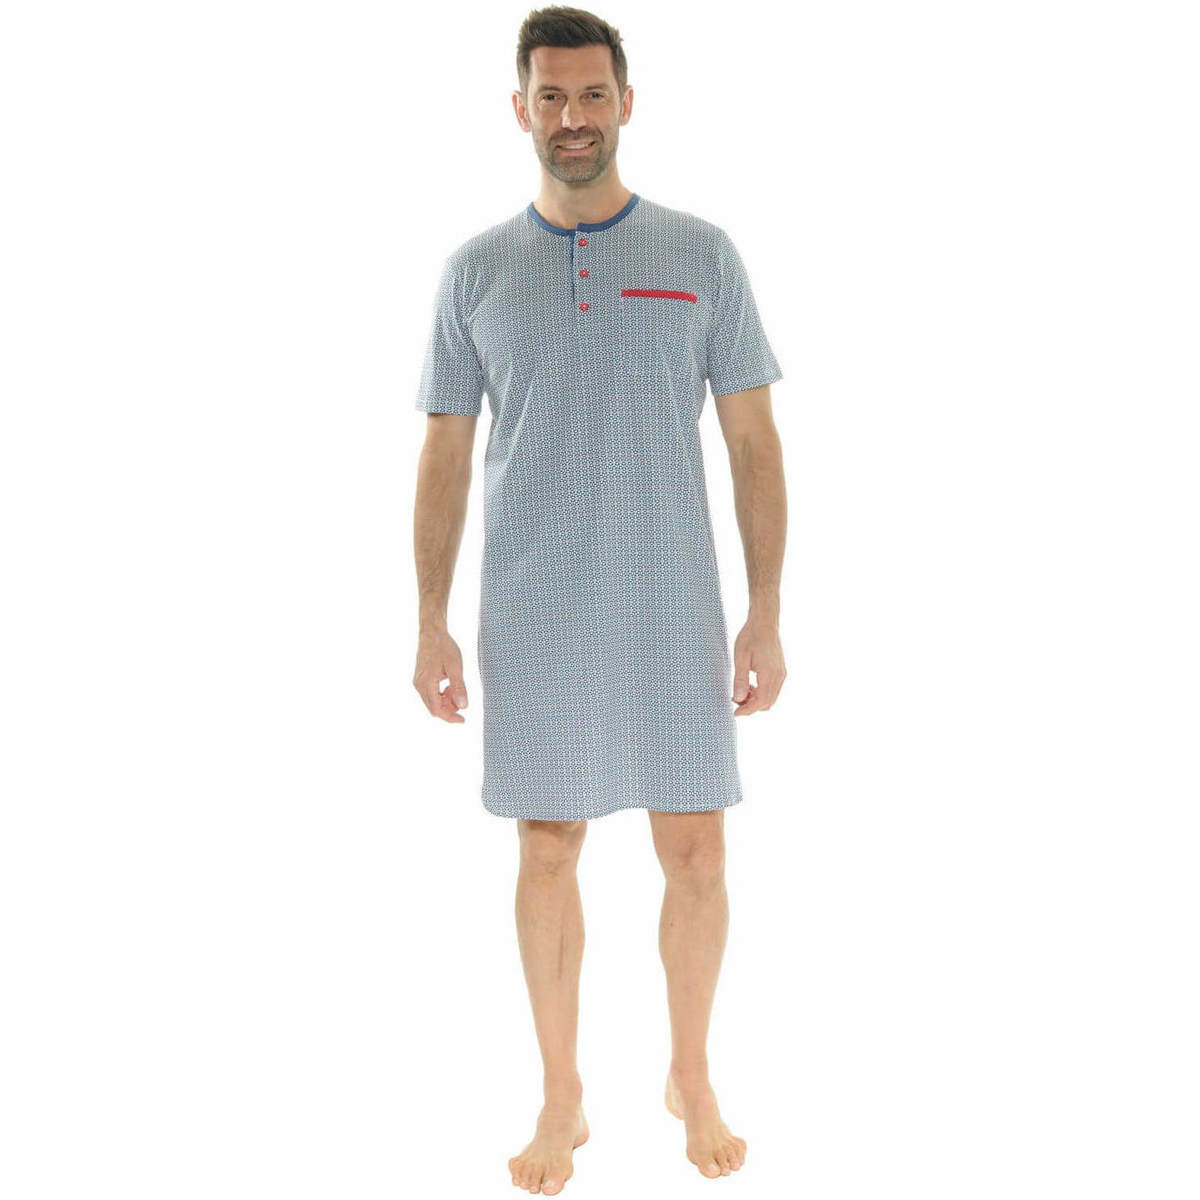 Kleidung Herren Pyjamas/ Nachthemden Christian Cane NAEL Blau